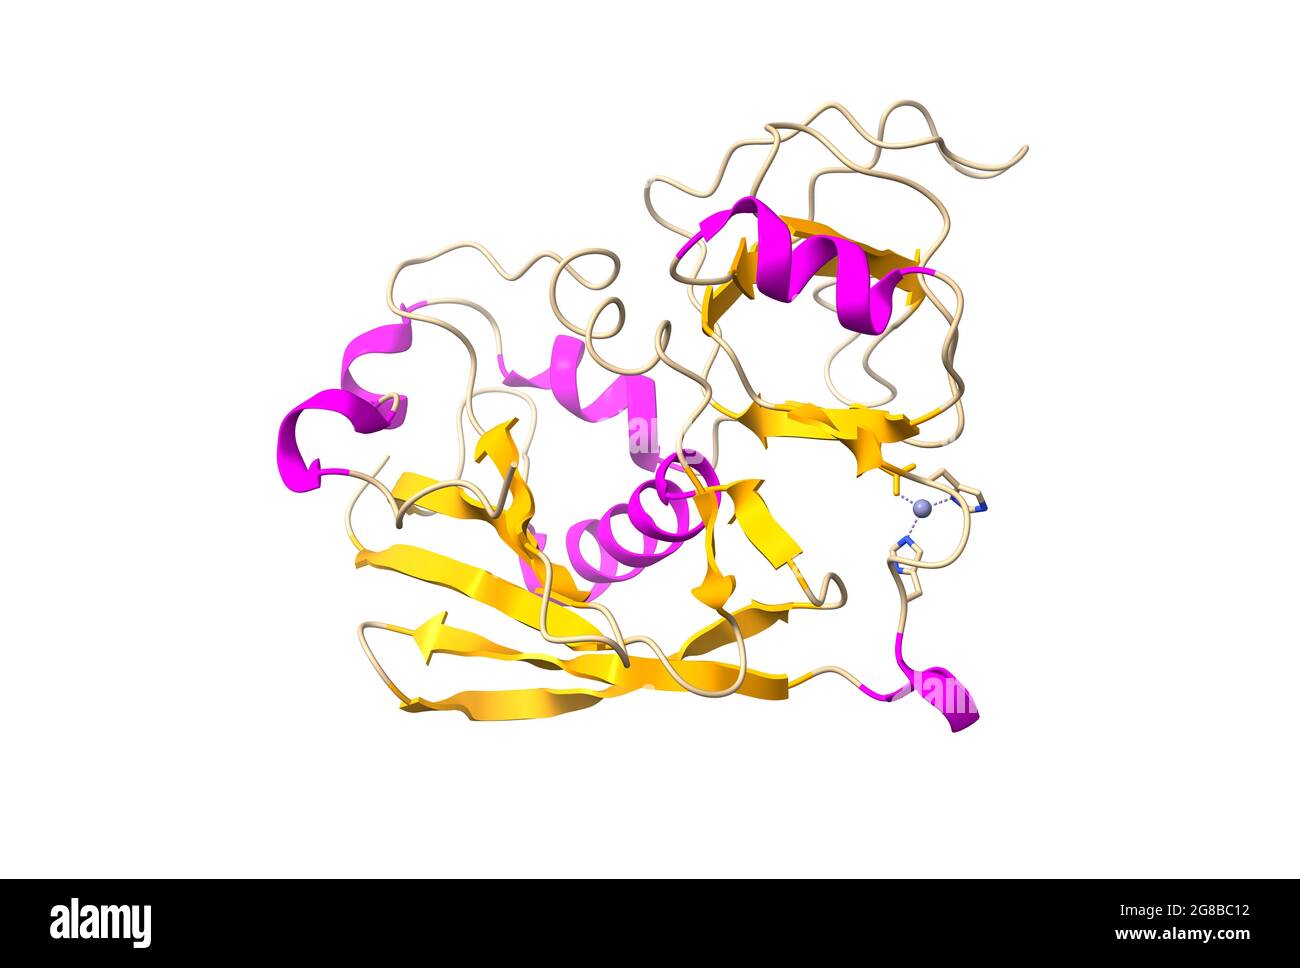 Structure of enterotoxin C2 from Staphylococcus aureus, 3D cartoon model, secondary structure color scheme, white background Stock Photo